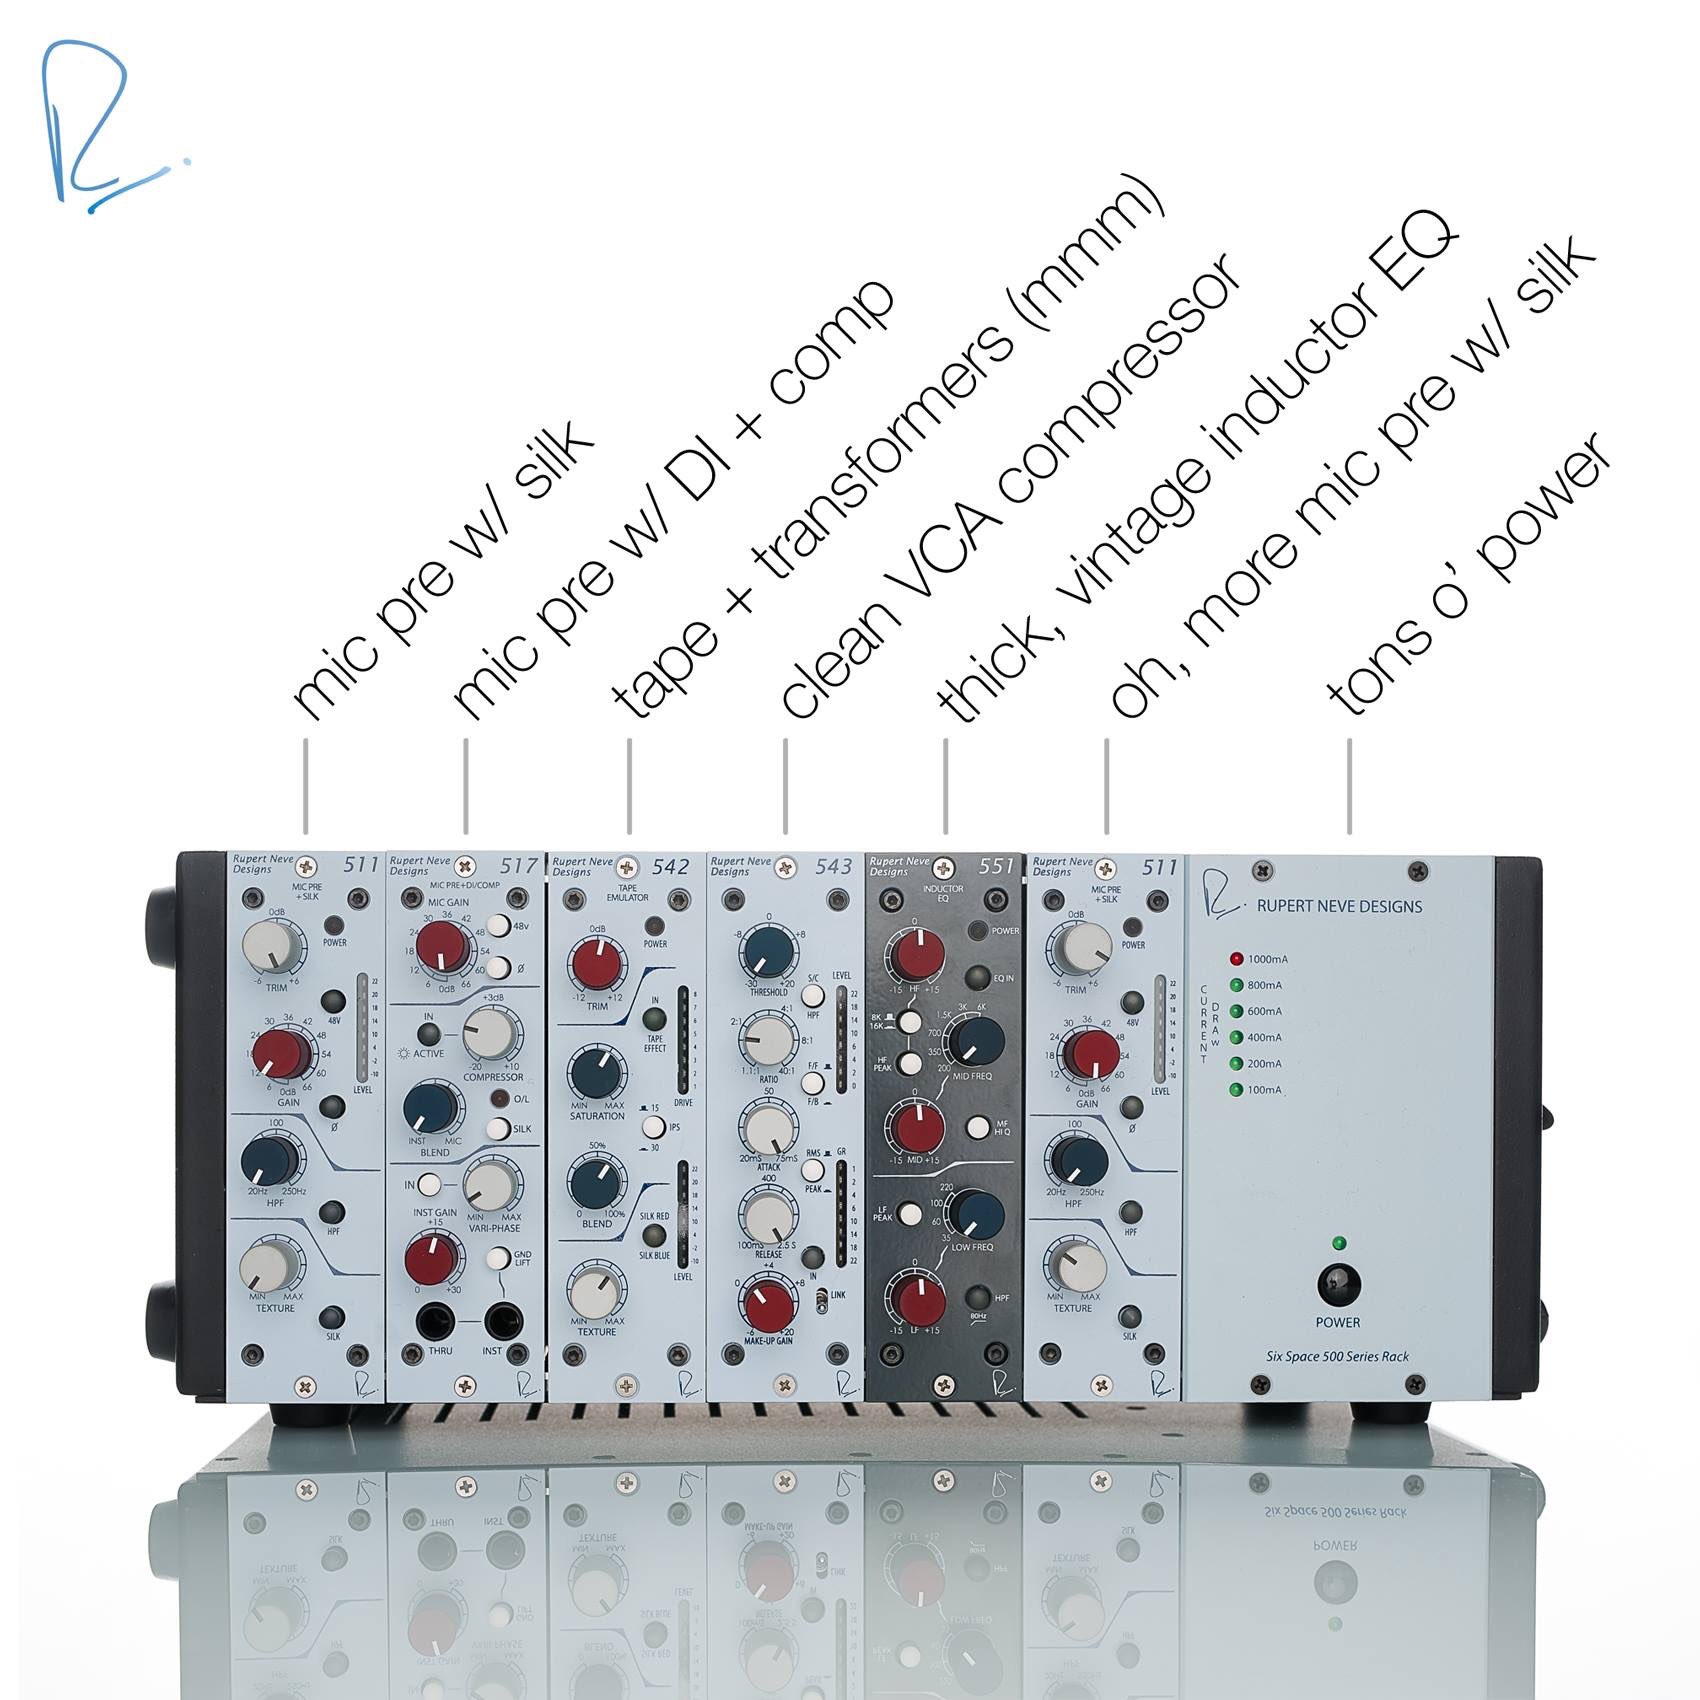 Rupert Neve Design Portico 542 - 500 Series - Effecten processor - Variation 4